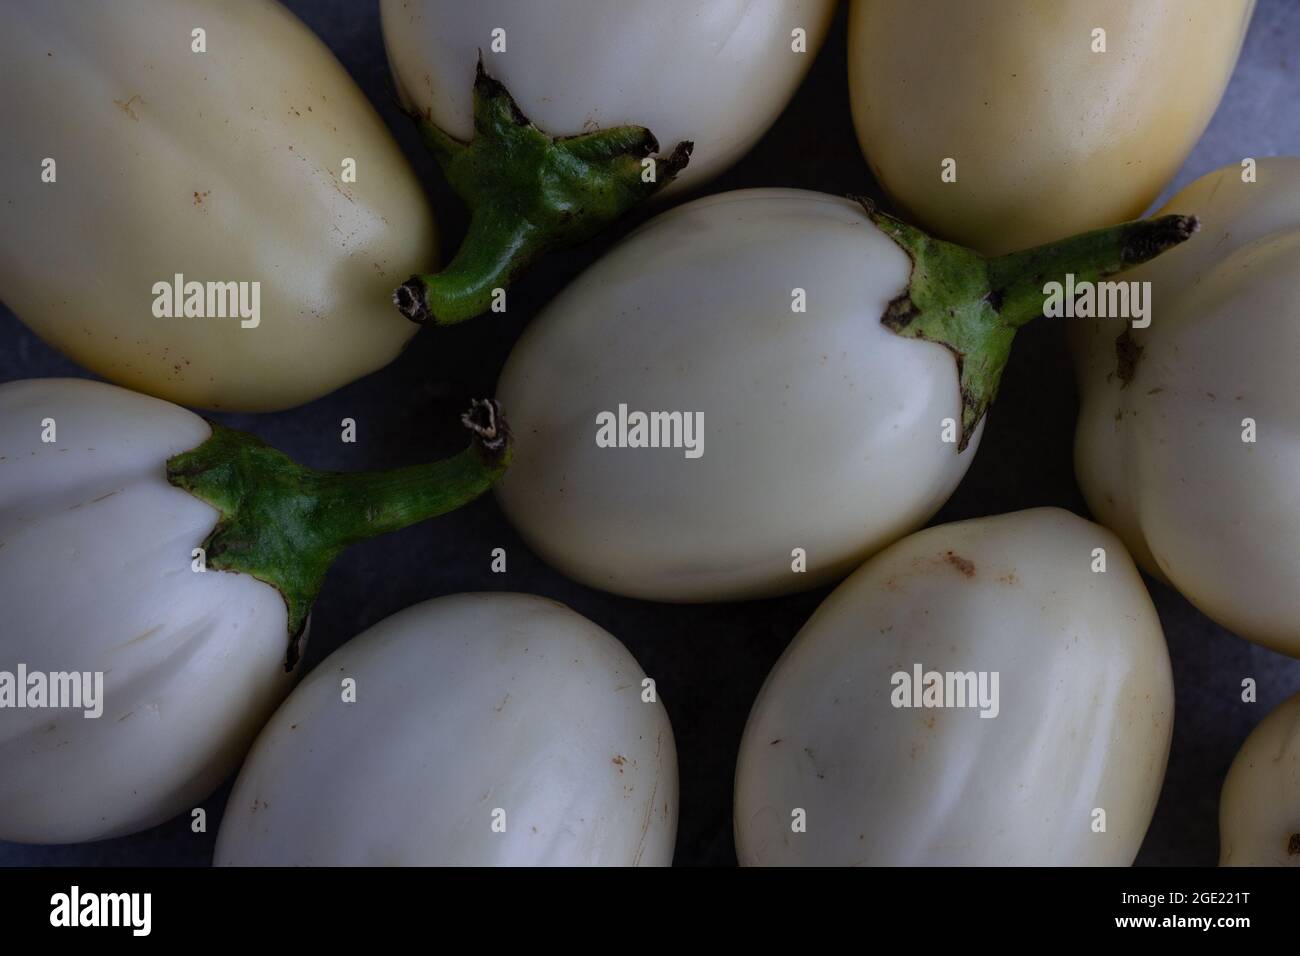 African White Garden Egg / Eggplant Foto Stock